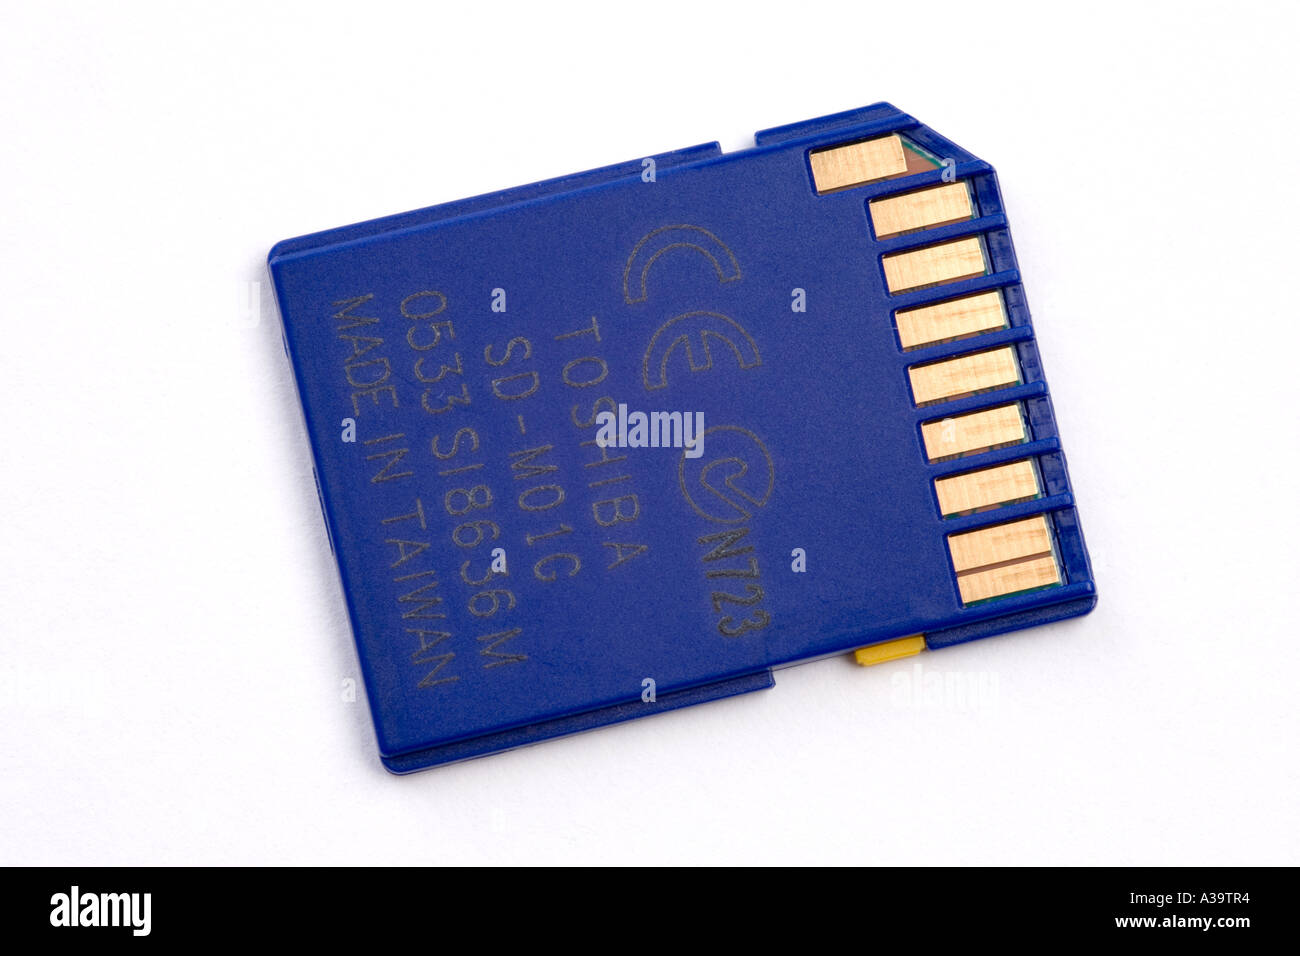 SD memory card Stock Photo